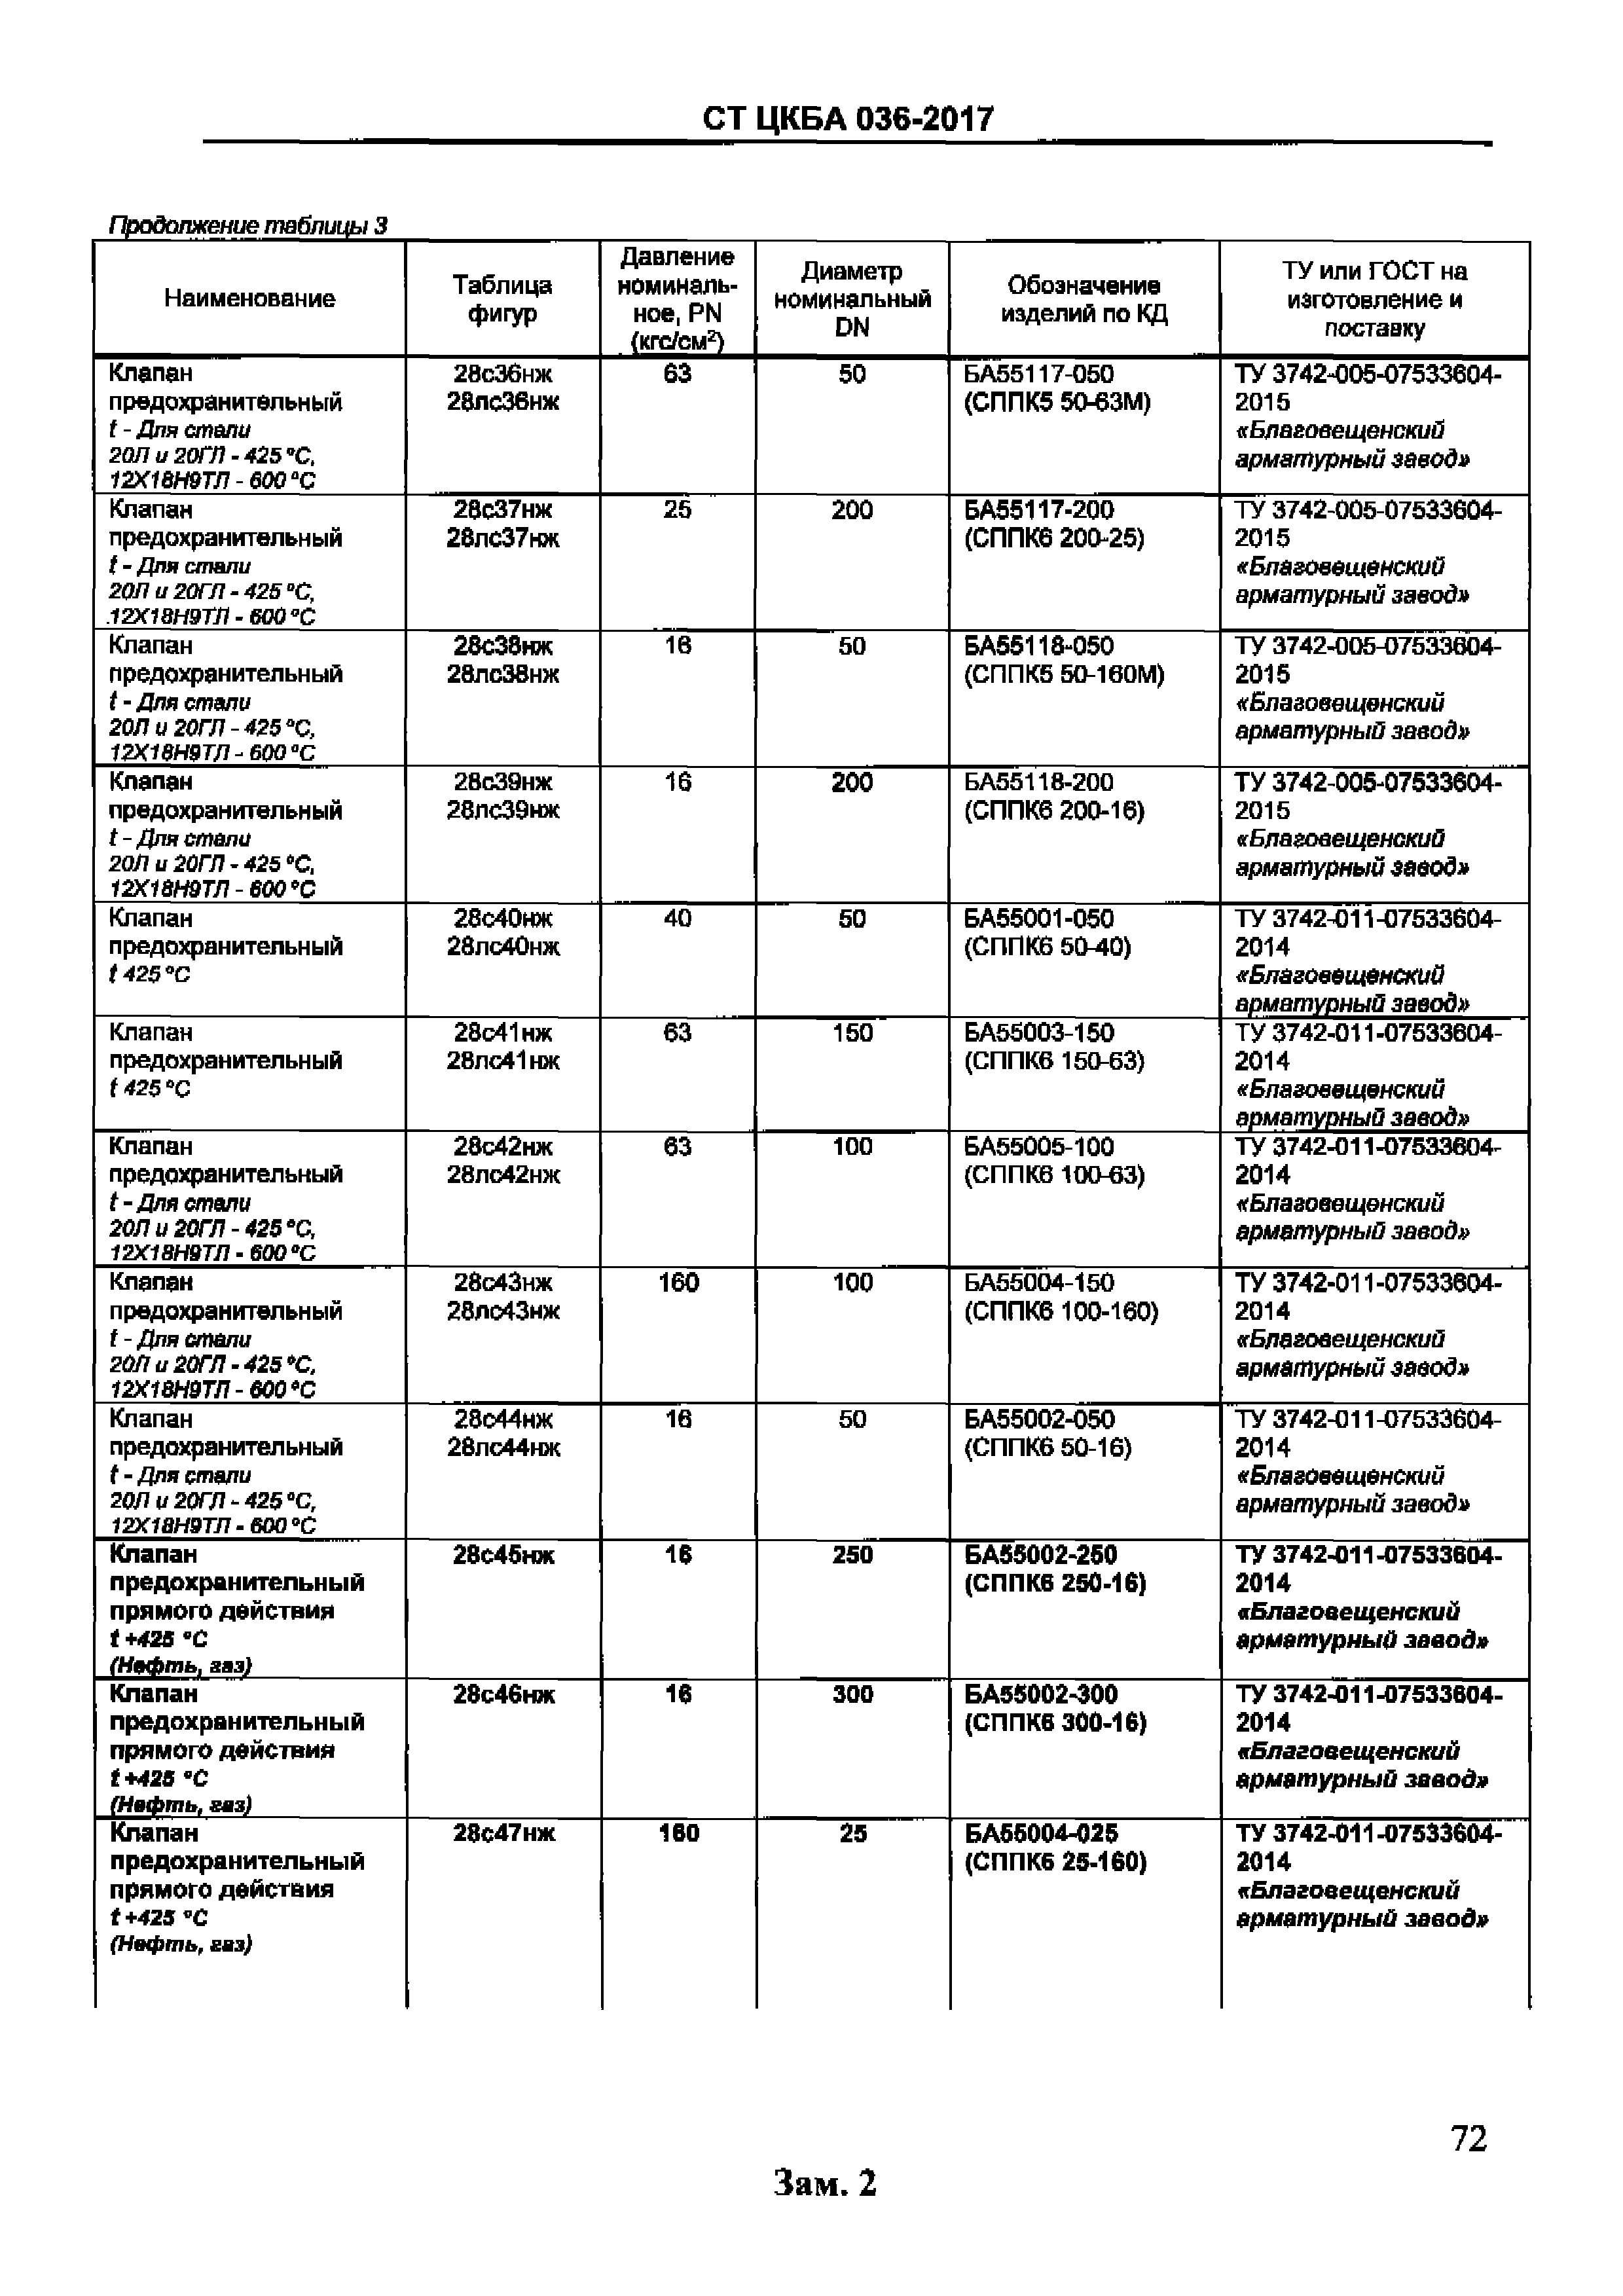 Таблица фигур запорной арматуры ЦКБА